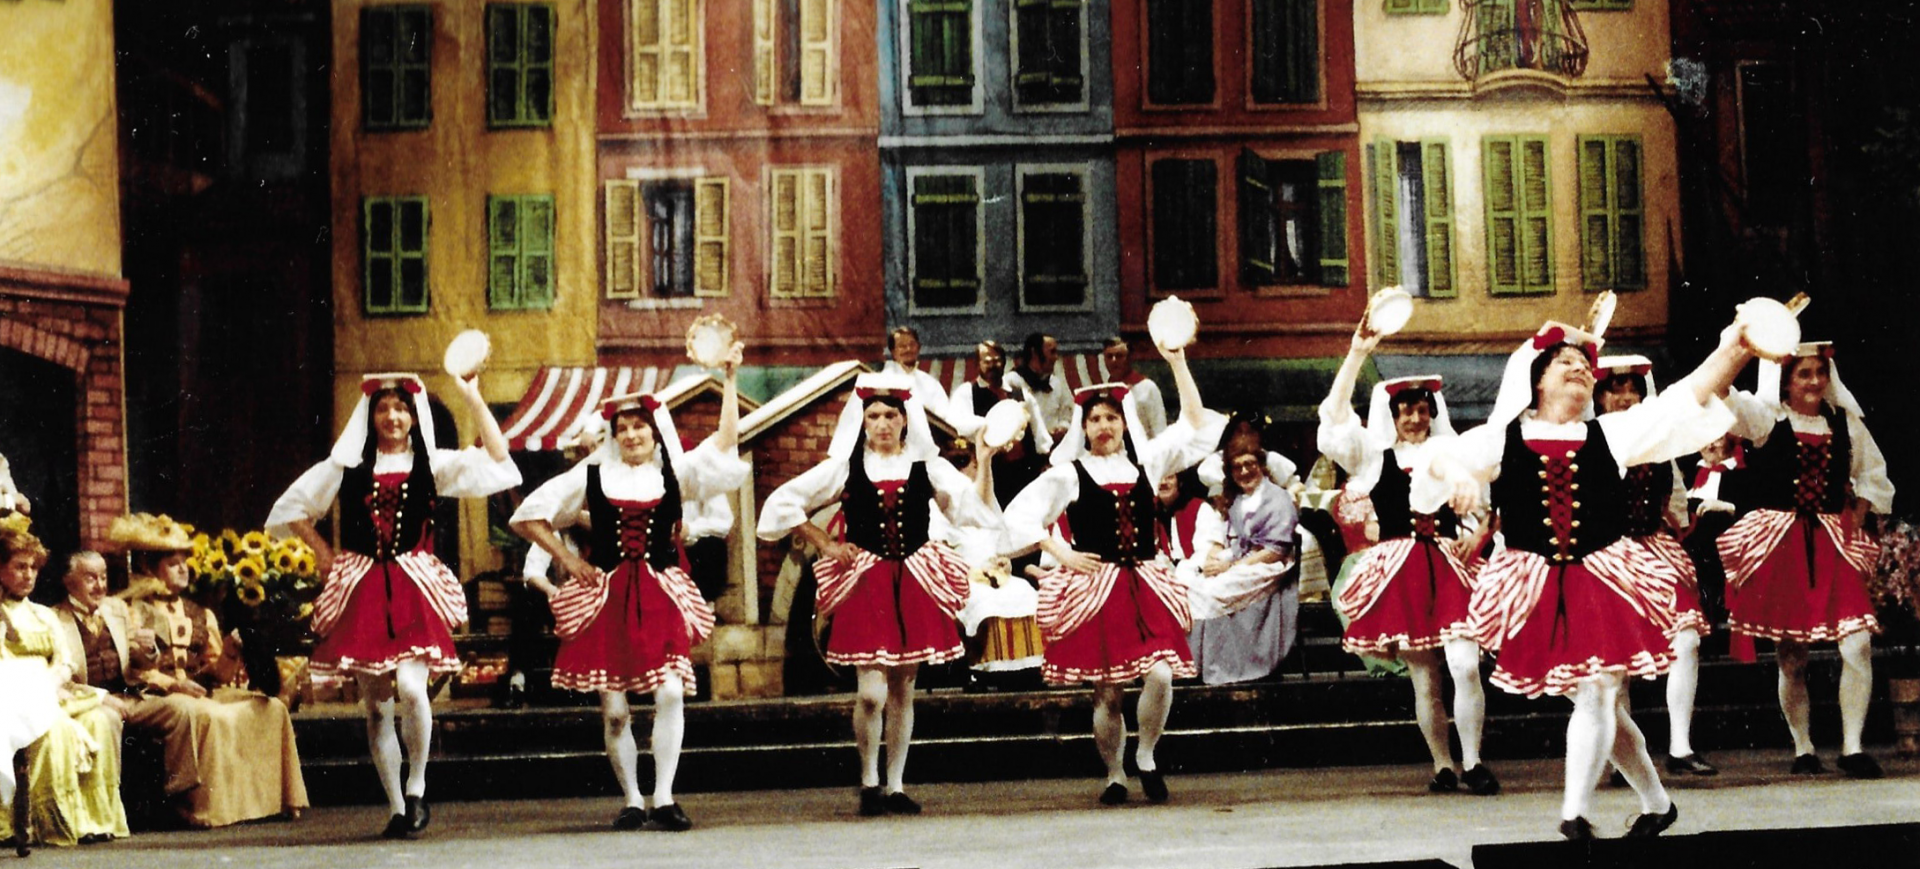 Olympisch För - Divertissementchen 1984 - Ballett tanzt